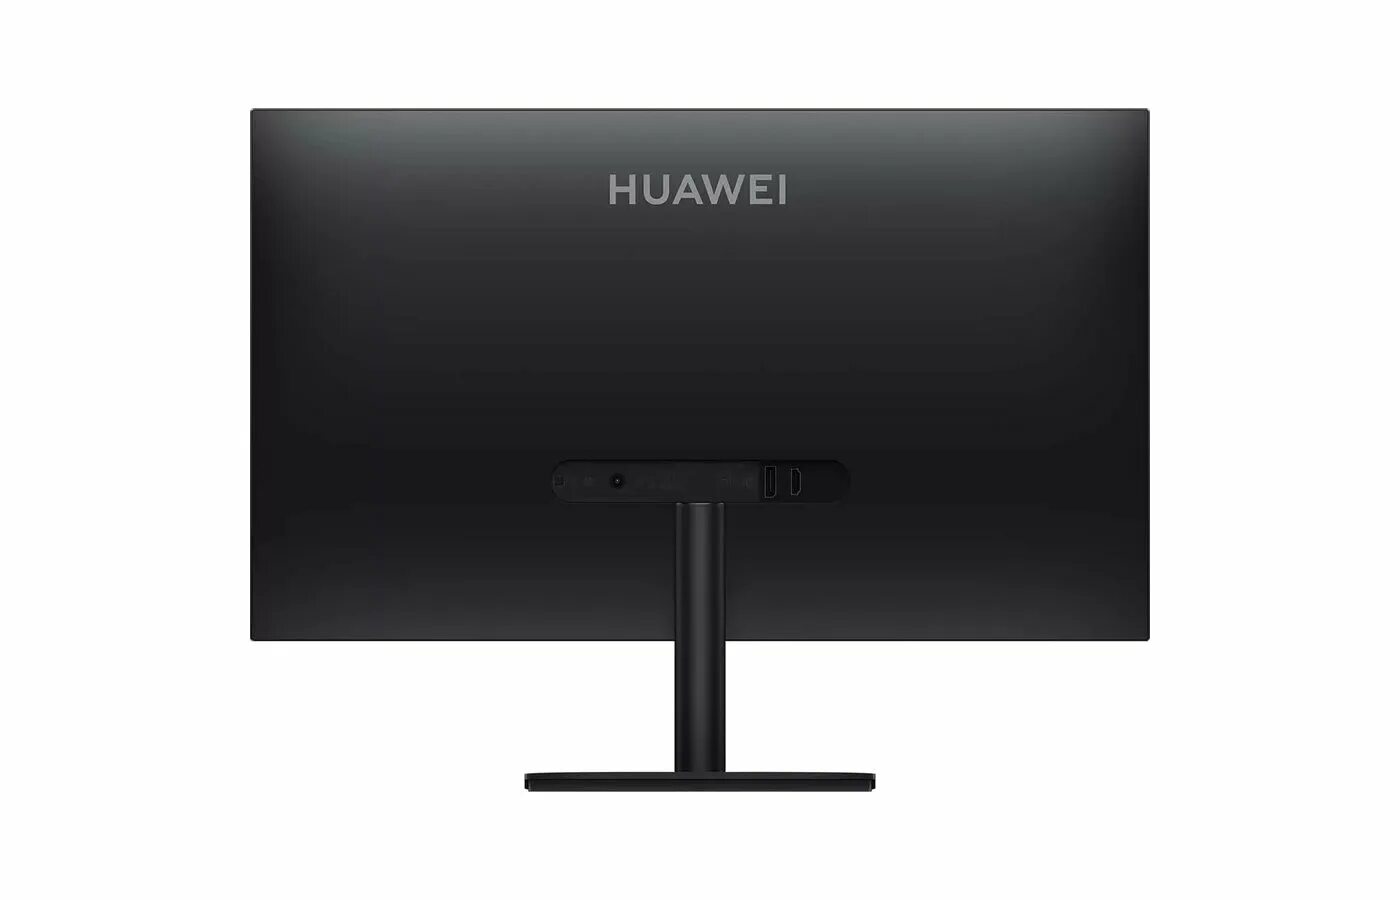 Монитор Huawei display 23.8 ad80hw. Монитор Huawei display ad80hw 23.8", черный. Huawei display 23.8. Монитор Huawei mateview 23.8.